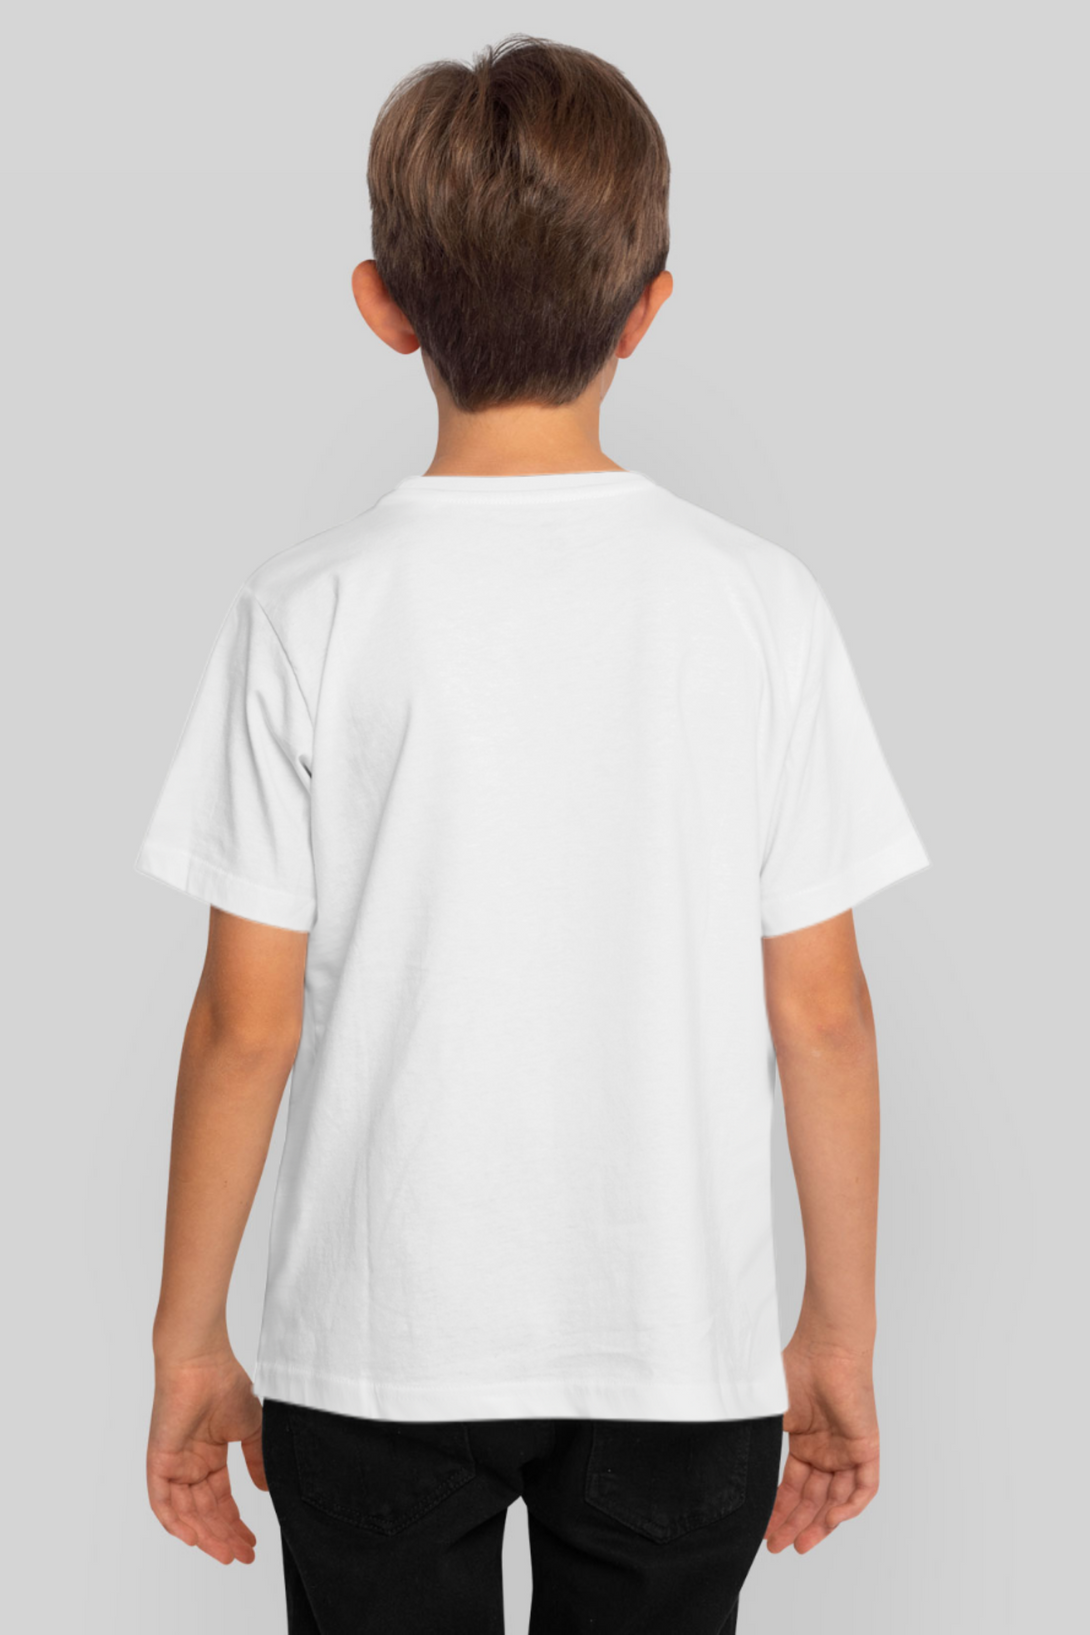 White T-Shirt For Boy - WowWaves - 2